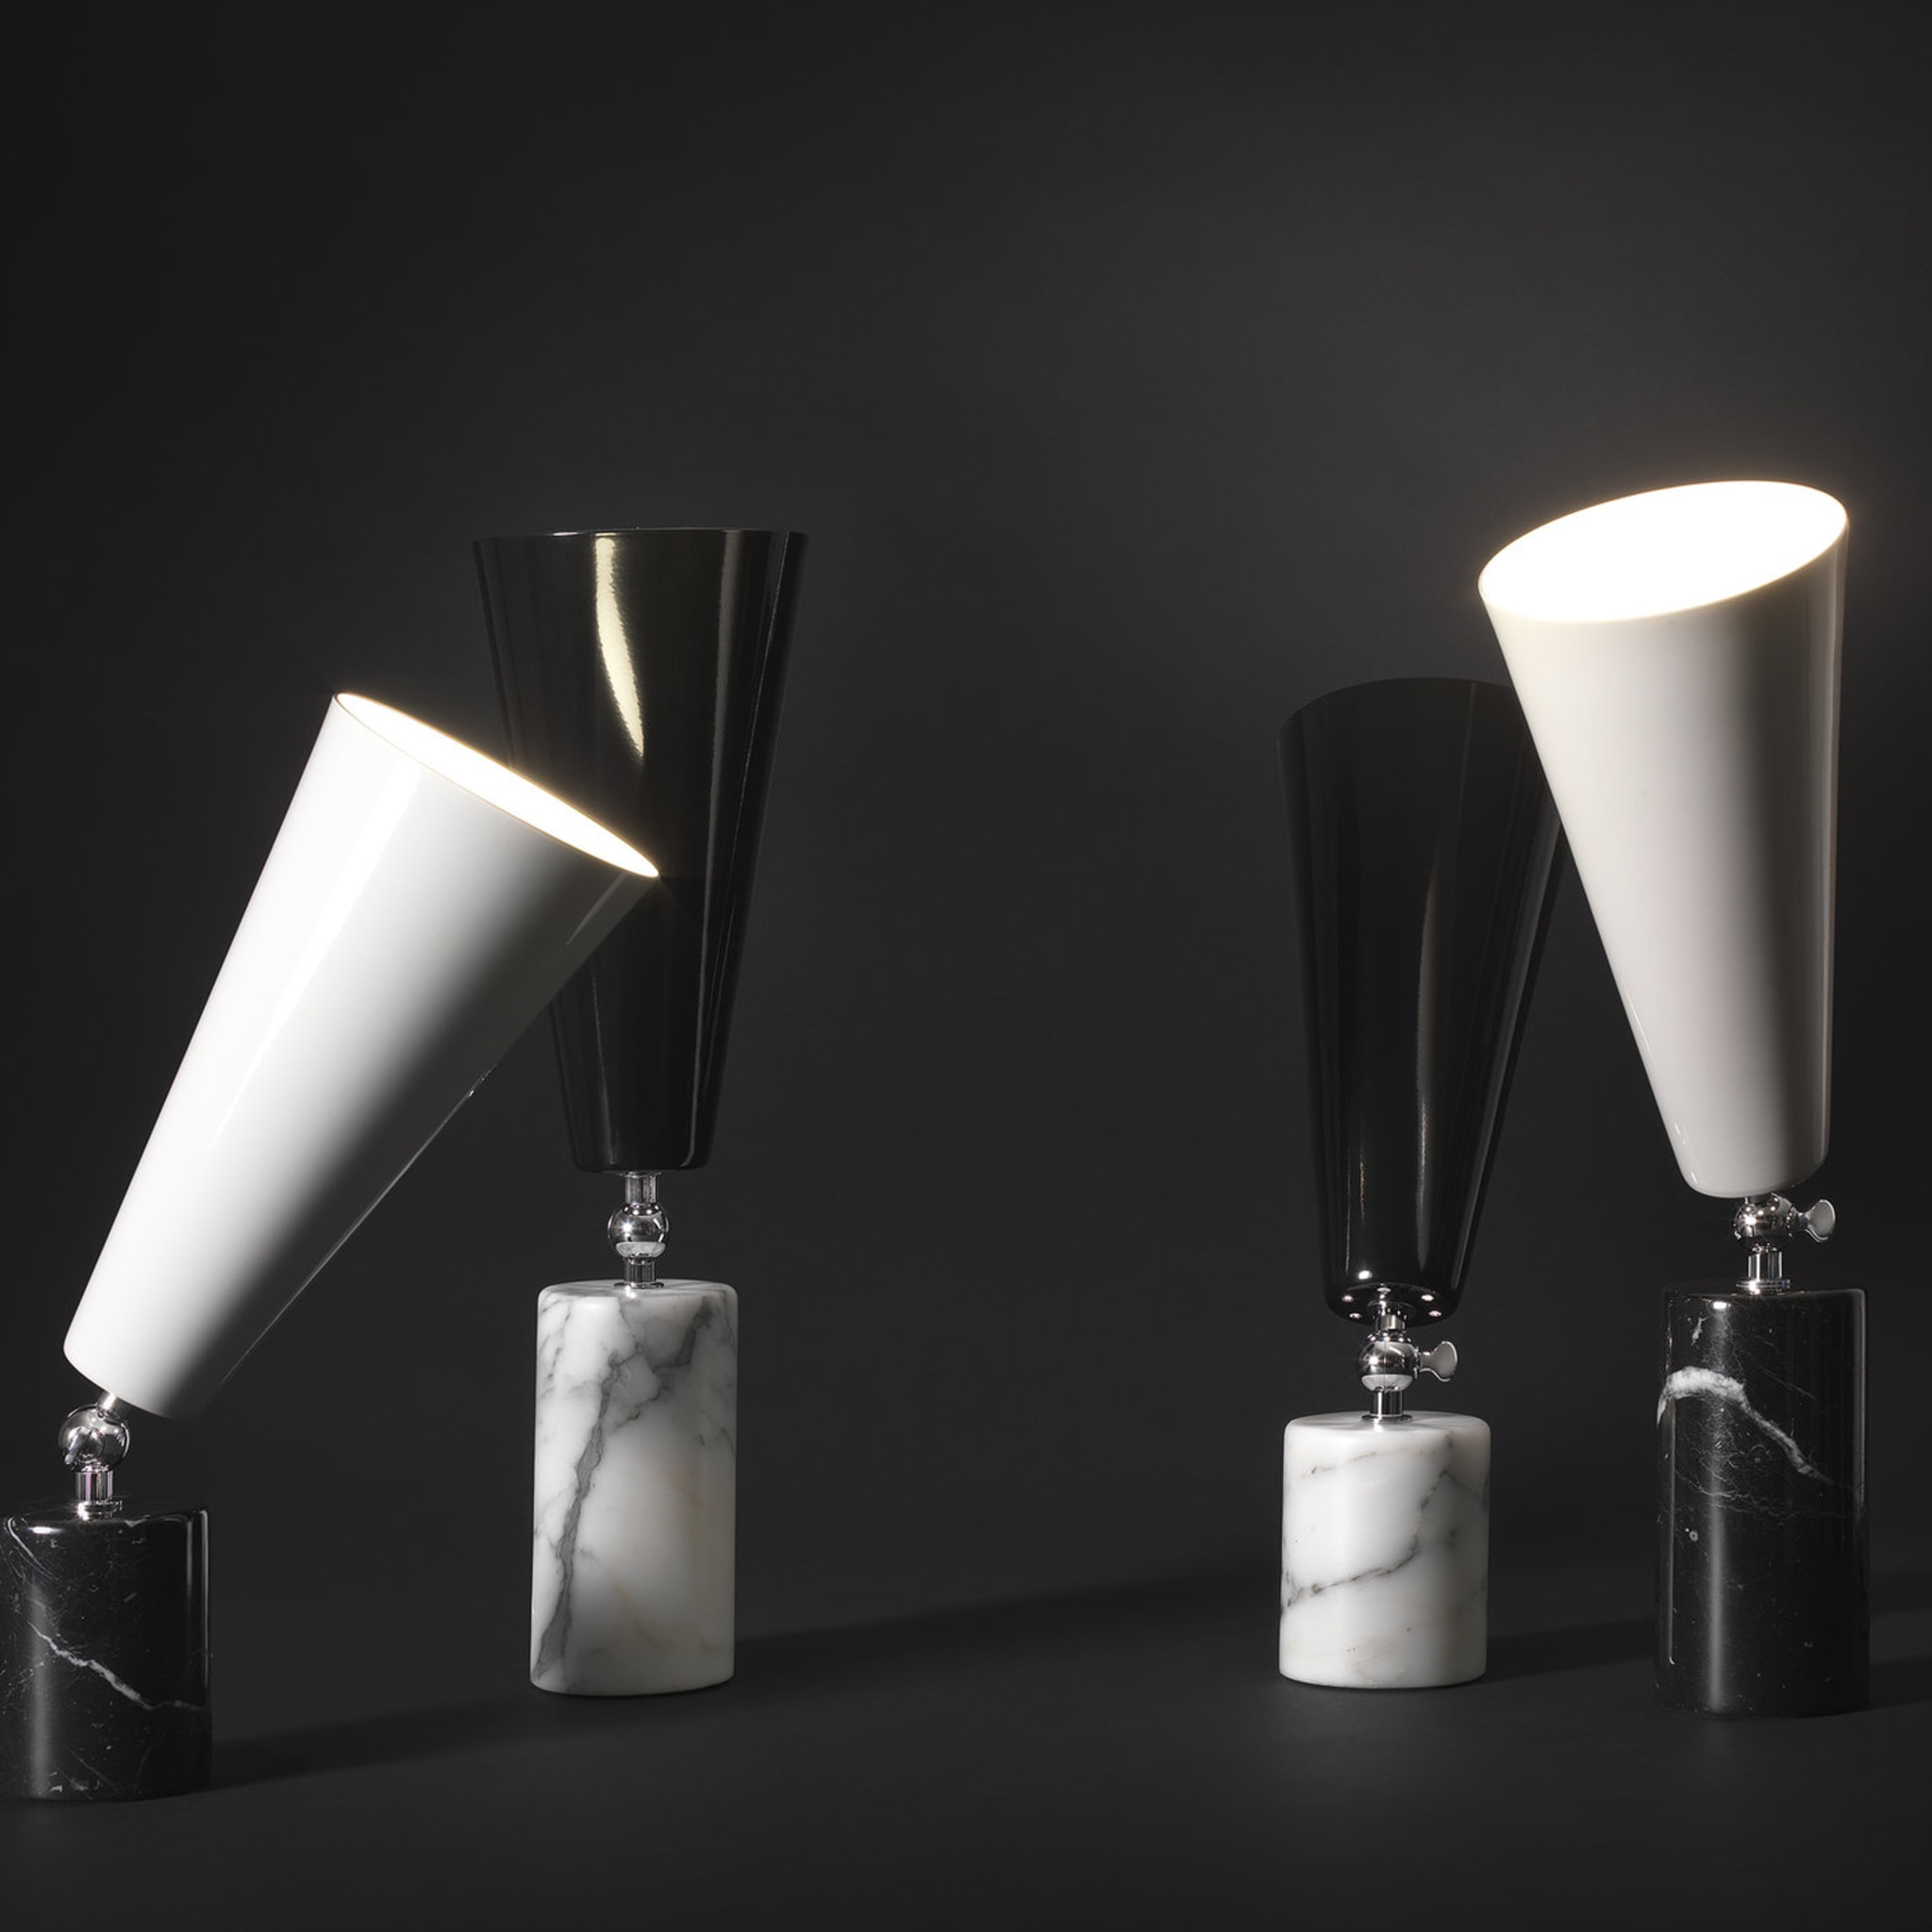 Vox Alta Table Lamp by Lorenza Bozzoli in Carrara Marble - Alternative view 1